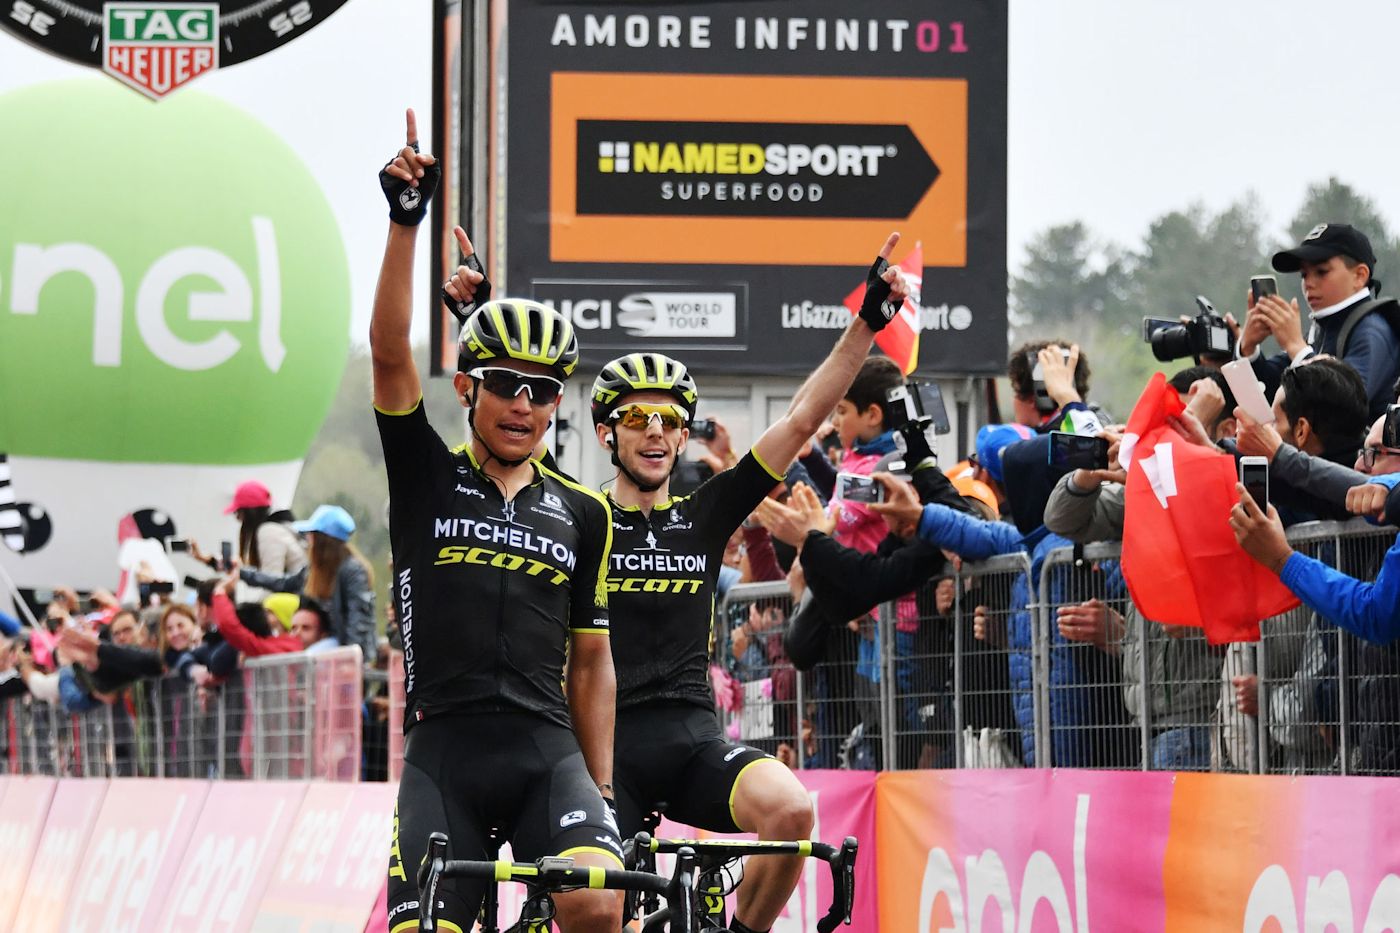 Giro d’Italia 2018: etap 6. Dublet Mitchelton, Esteban Chaves przed Simonem Yatesem